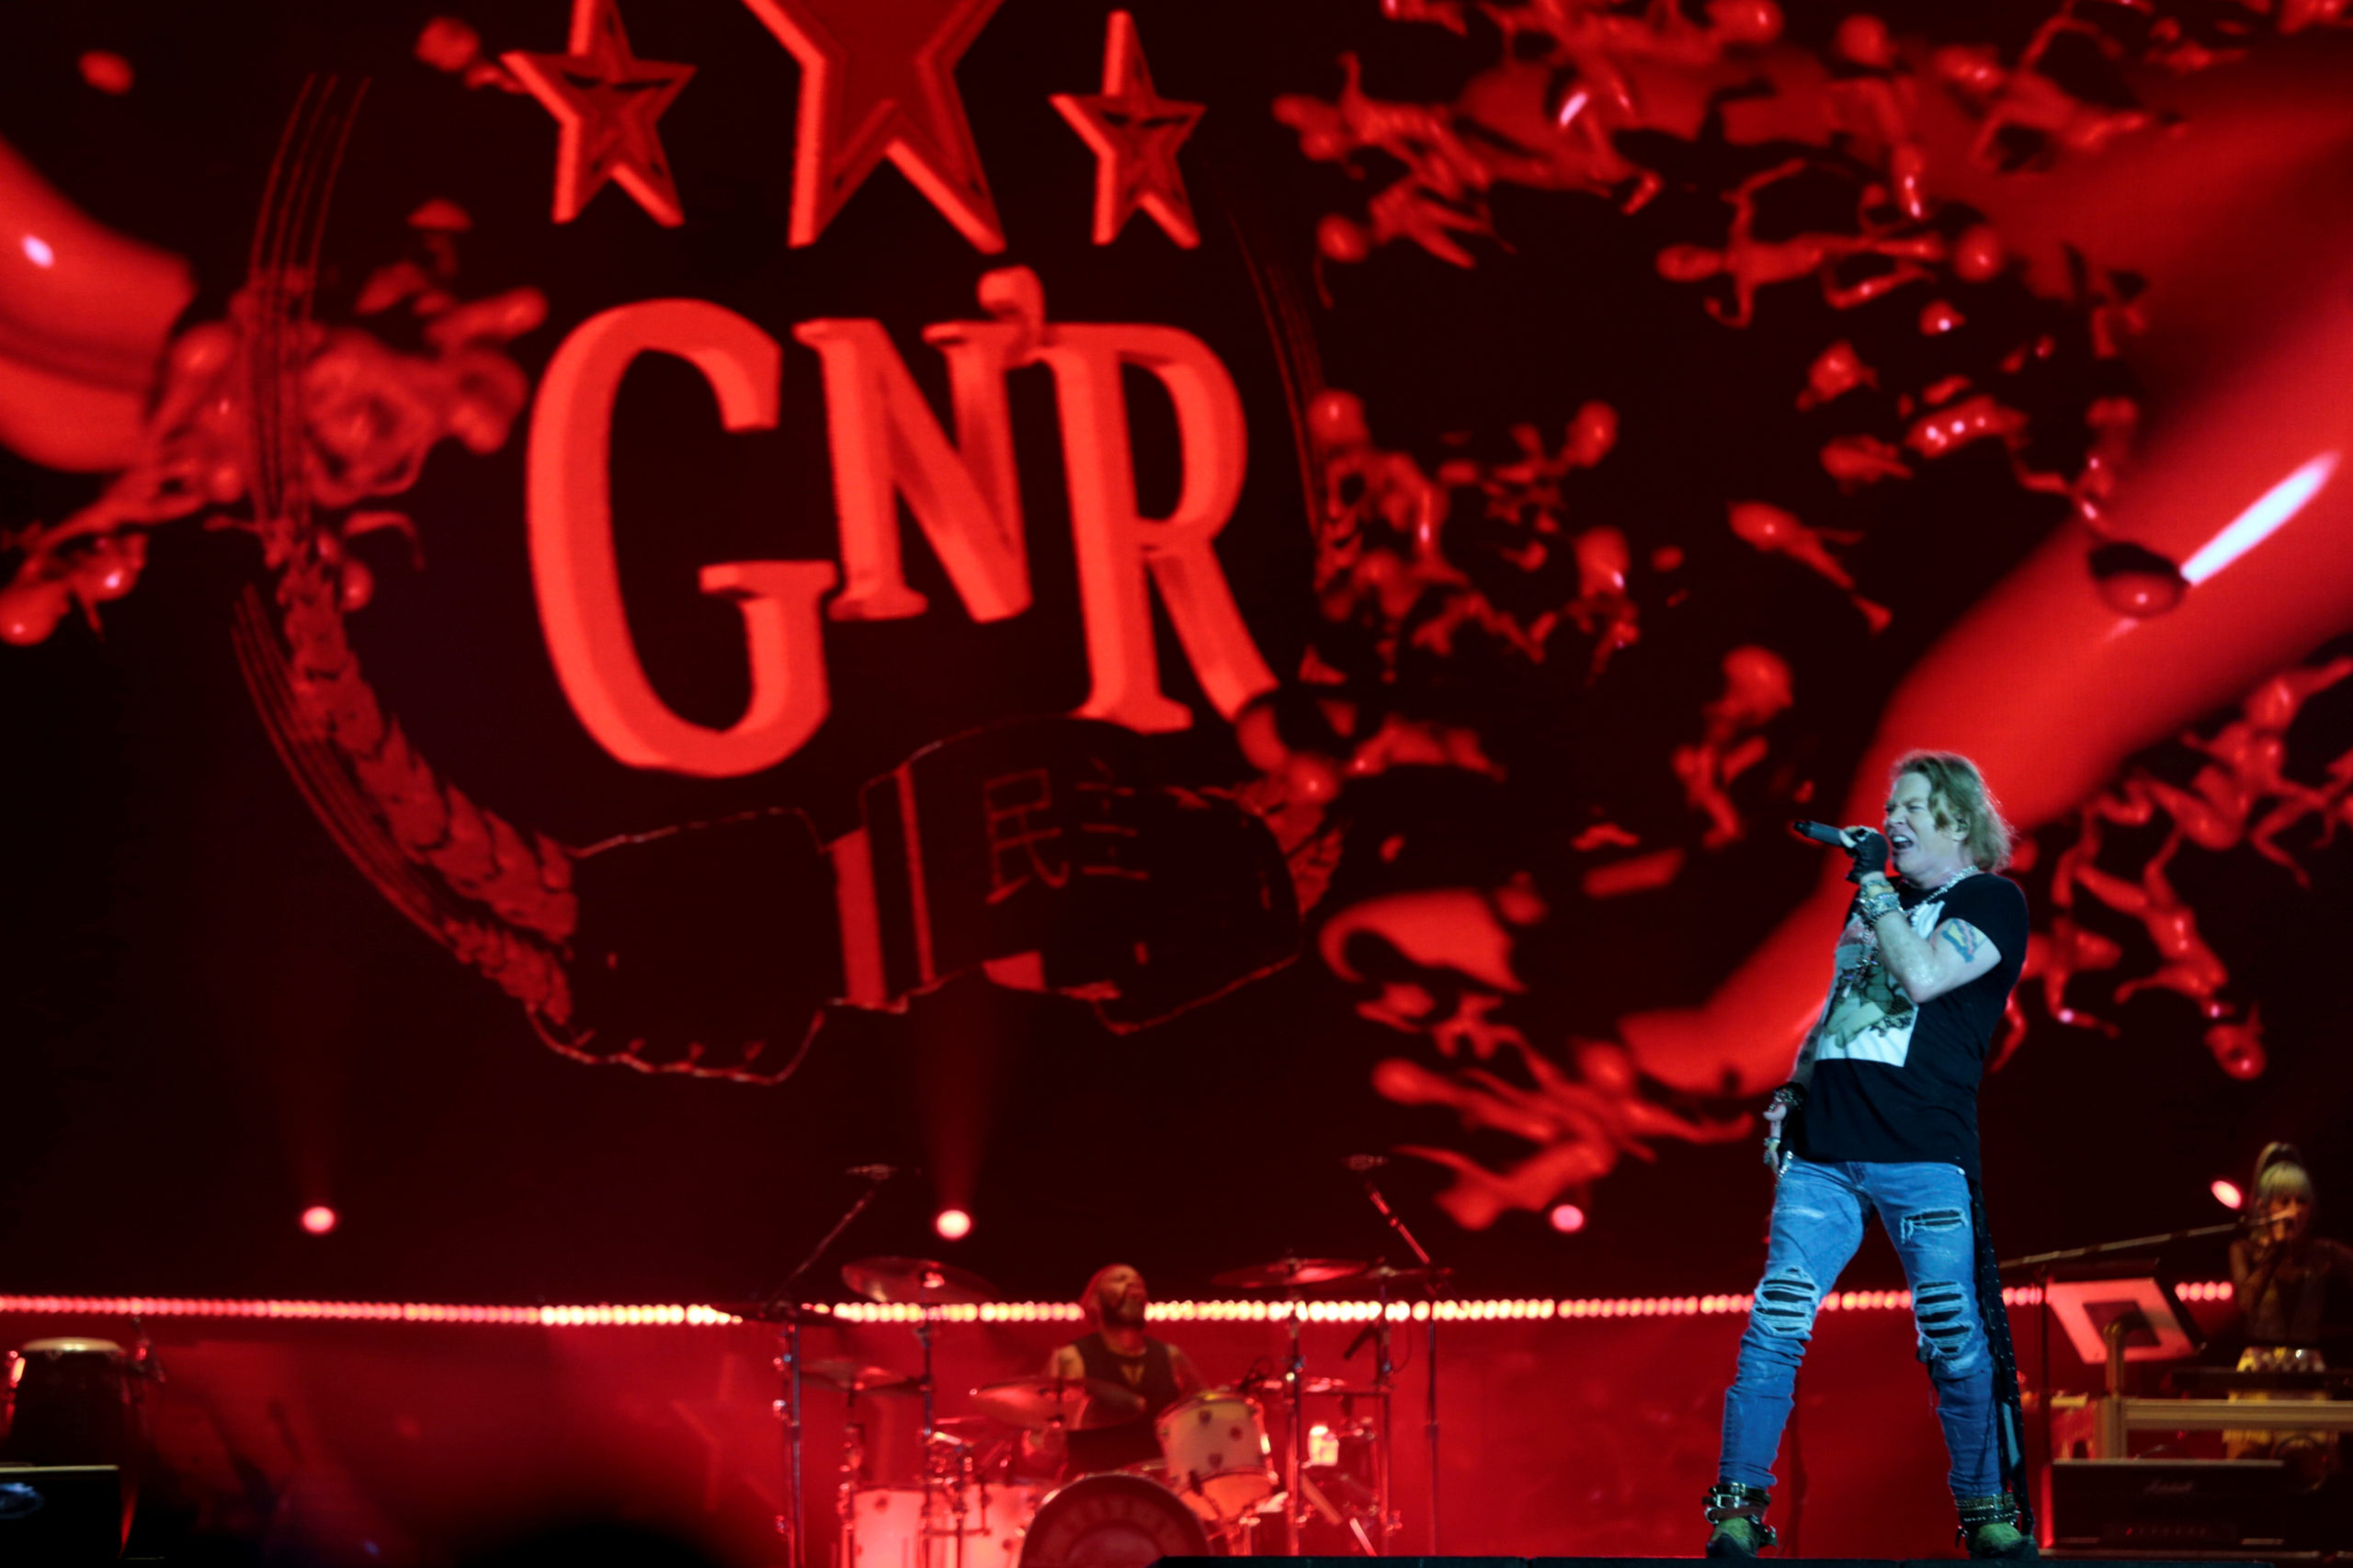 Guns N' Roses and Arctic Monkeys will join Elton John as headliners at the Glastonbury Festival in June